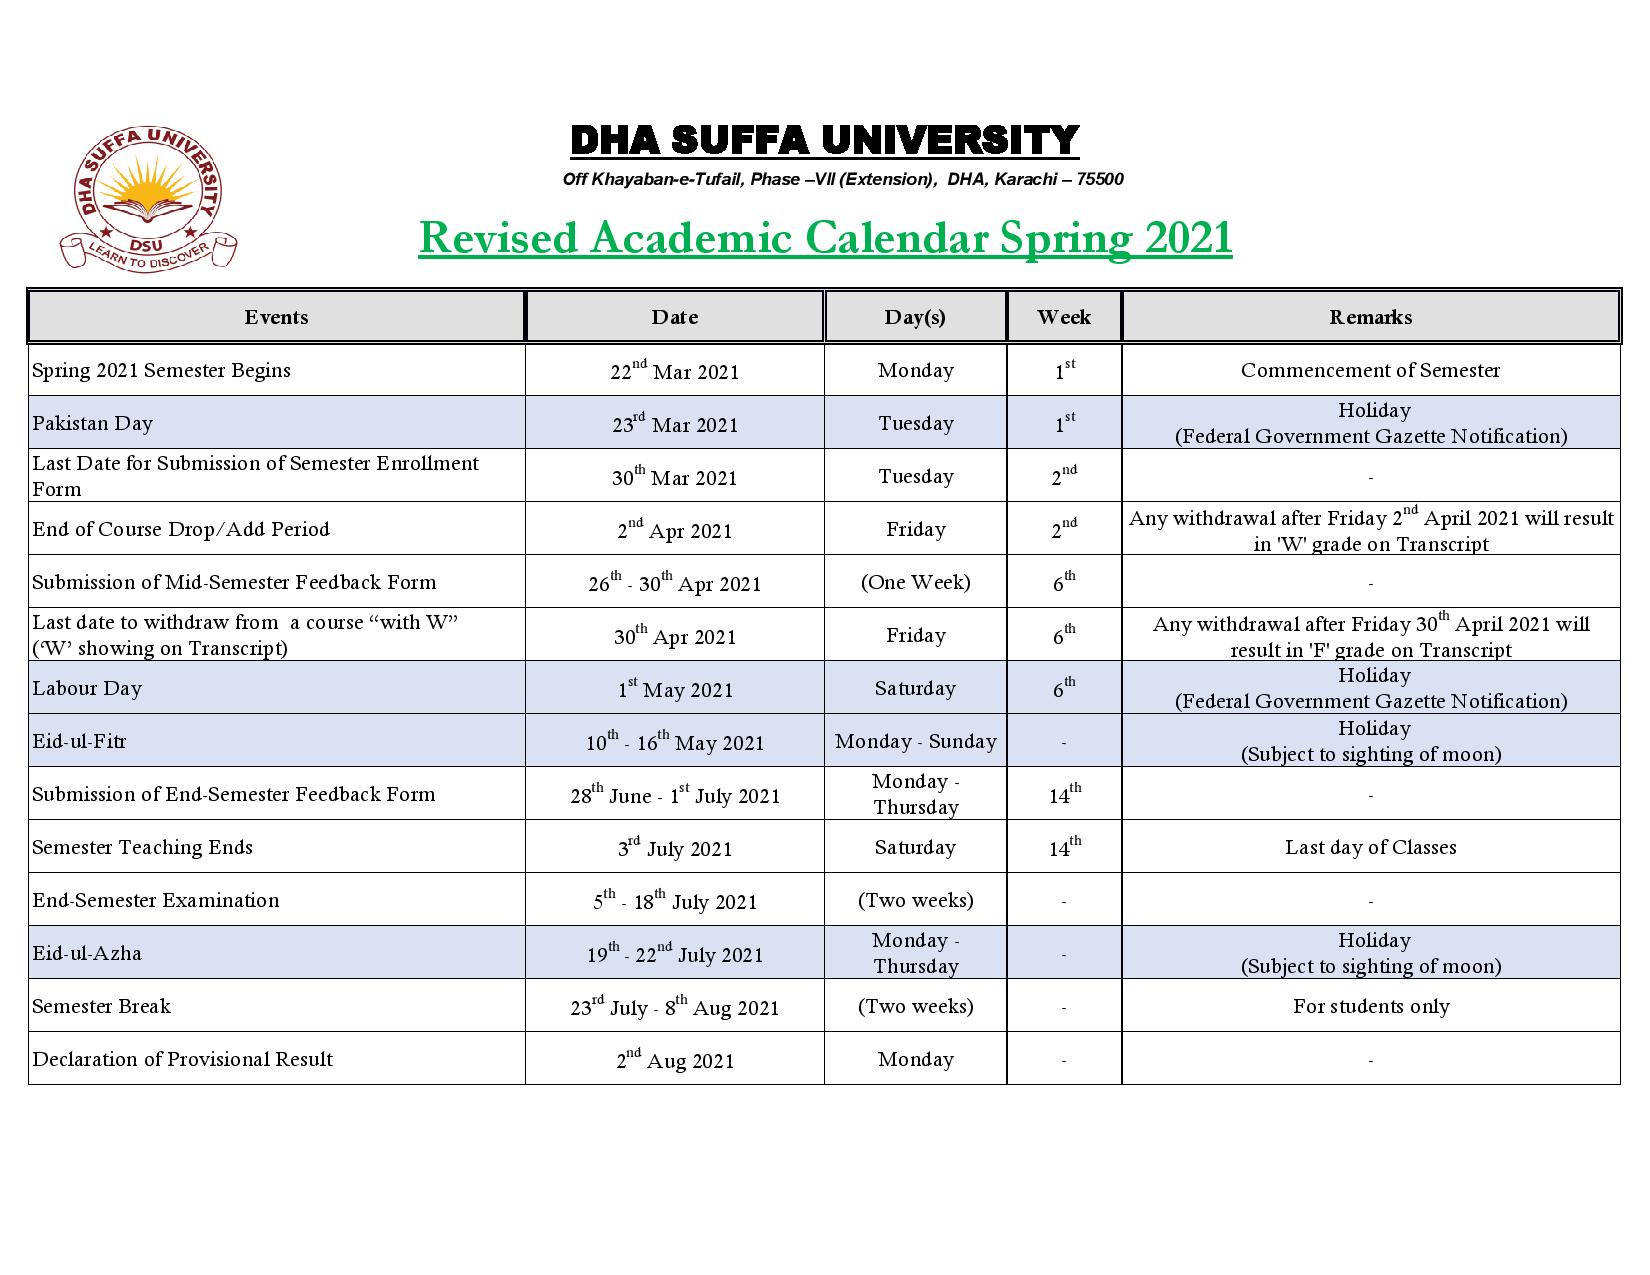 Academic Calendar - DHA Suffa University